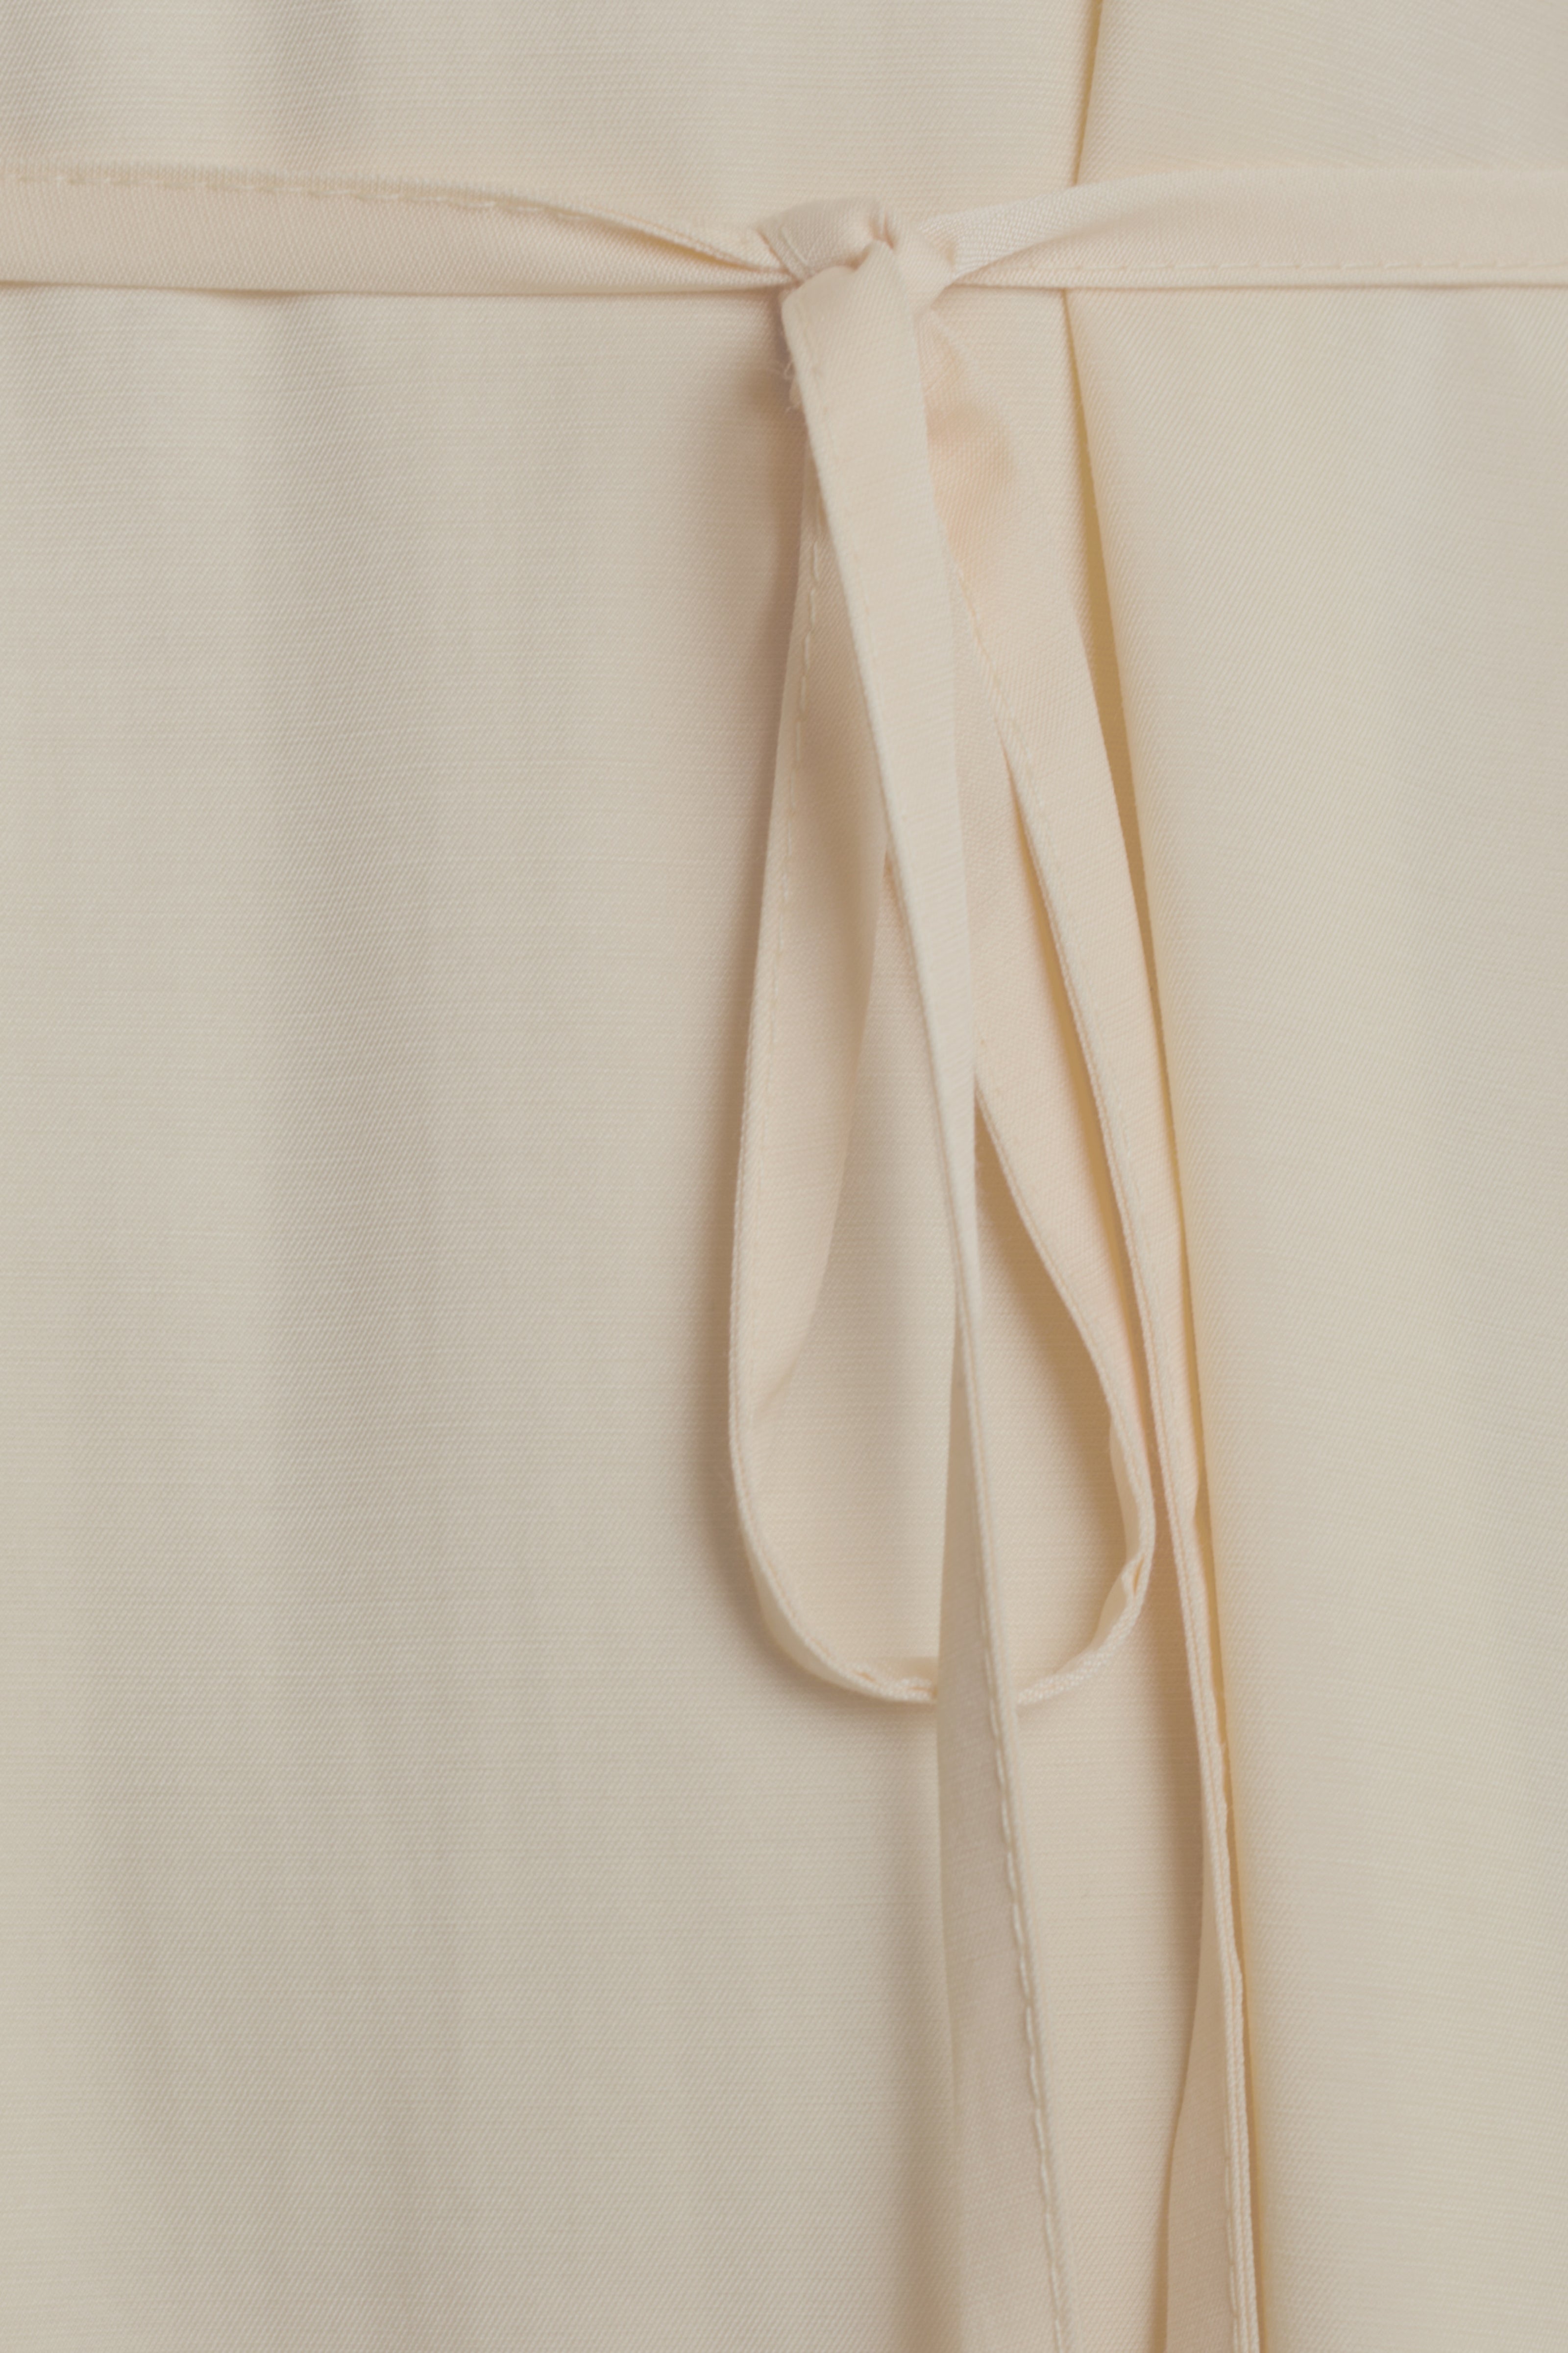 Cotton Blend Tiered Maxi Dress in Cream